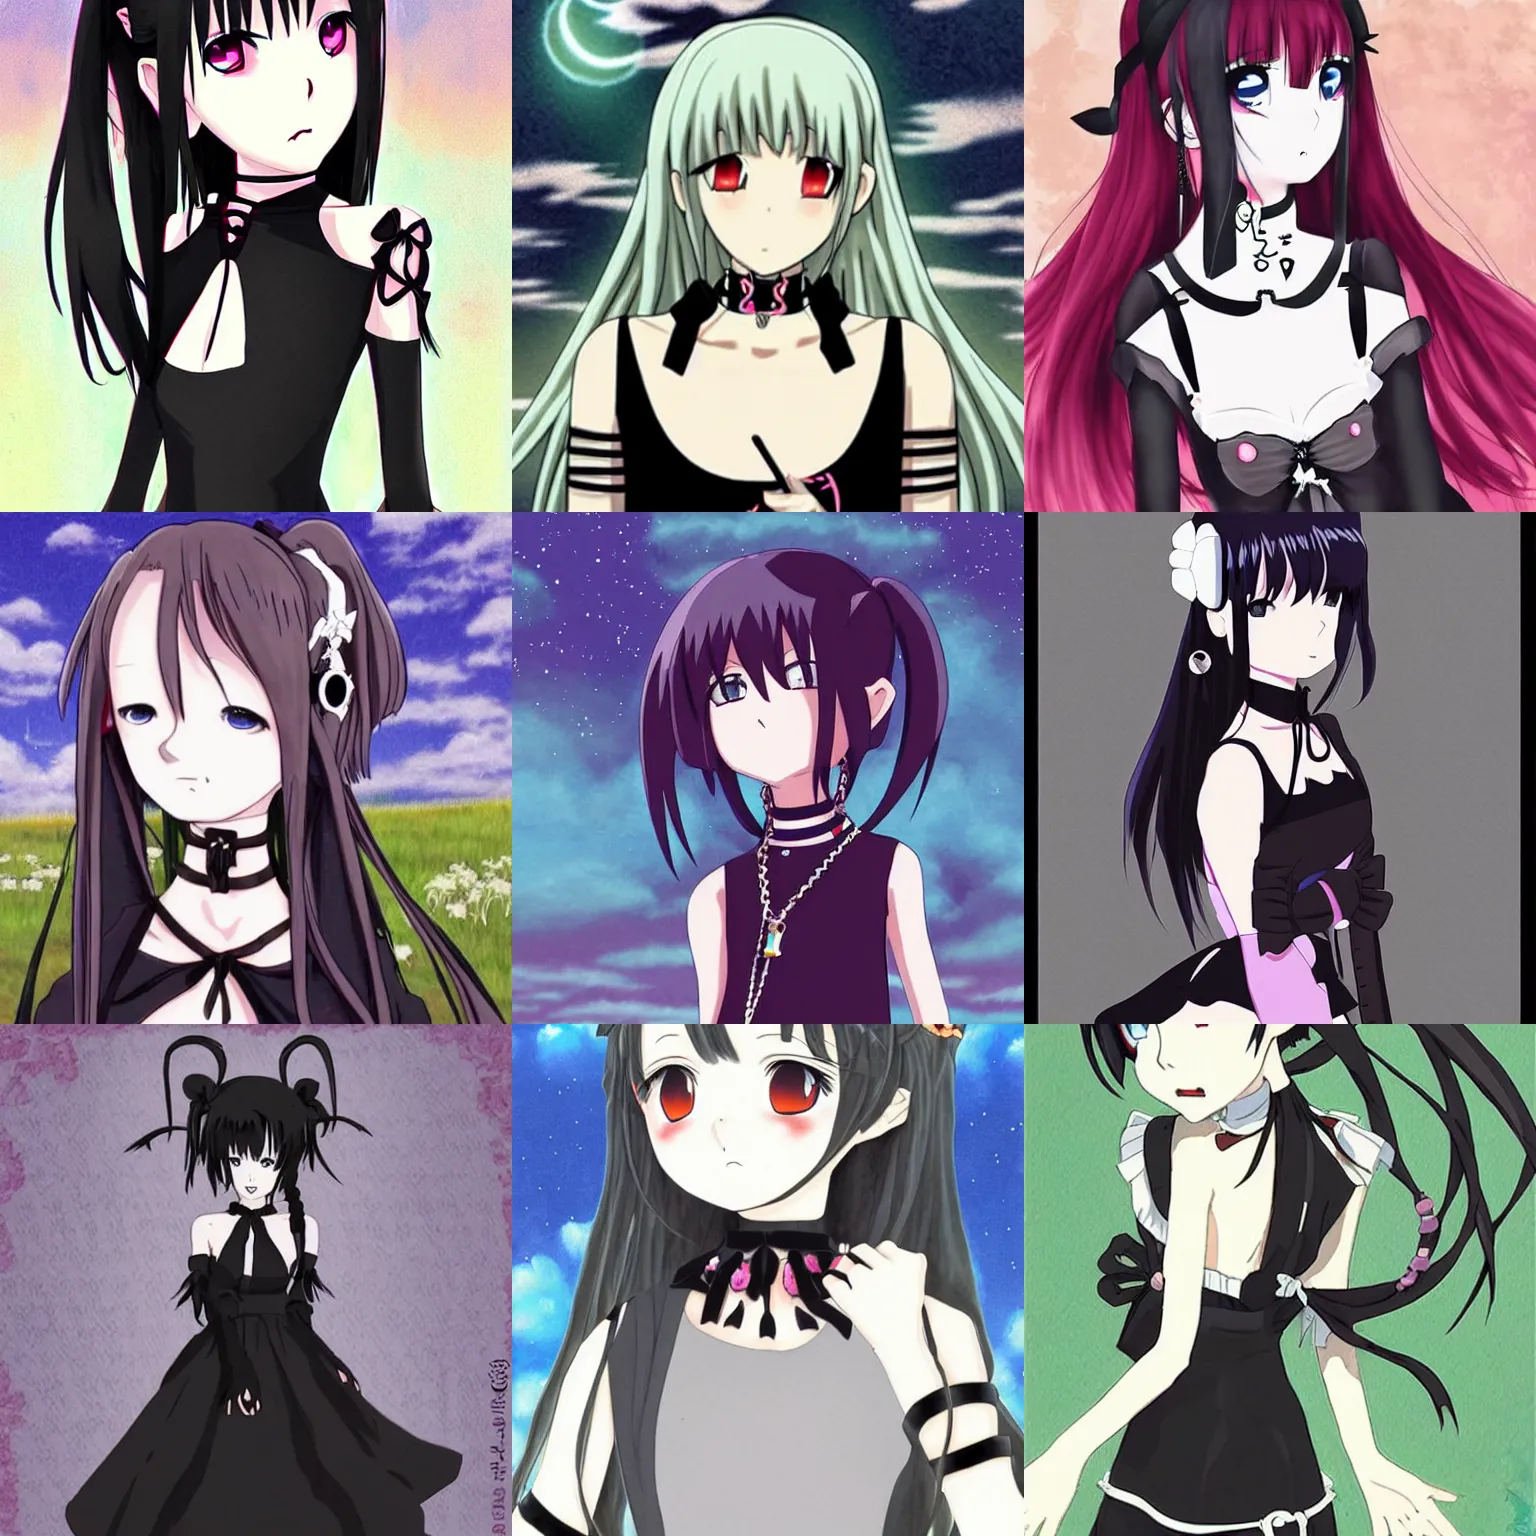 Prompt: goth anime girl wearing choker, black dress, studio ghibli anime art